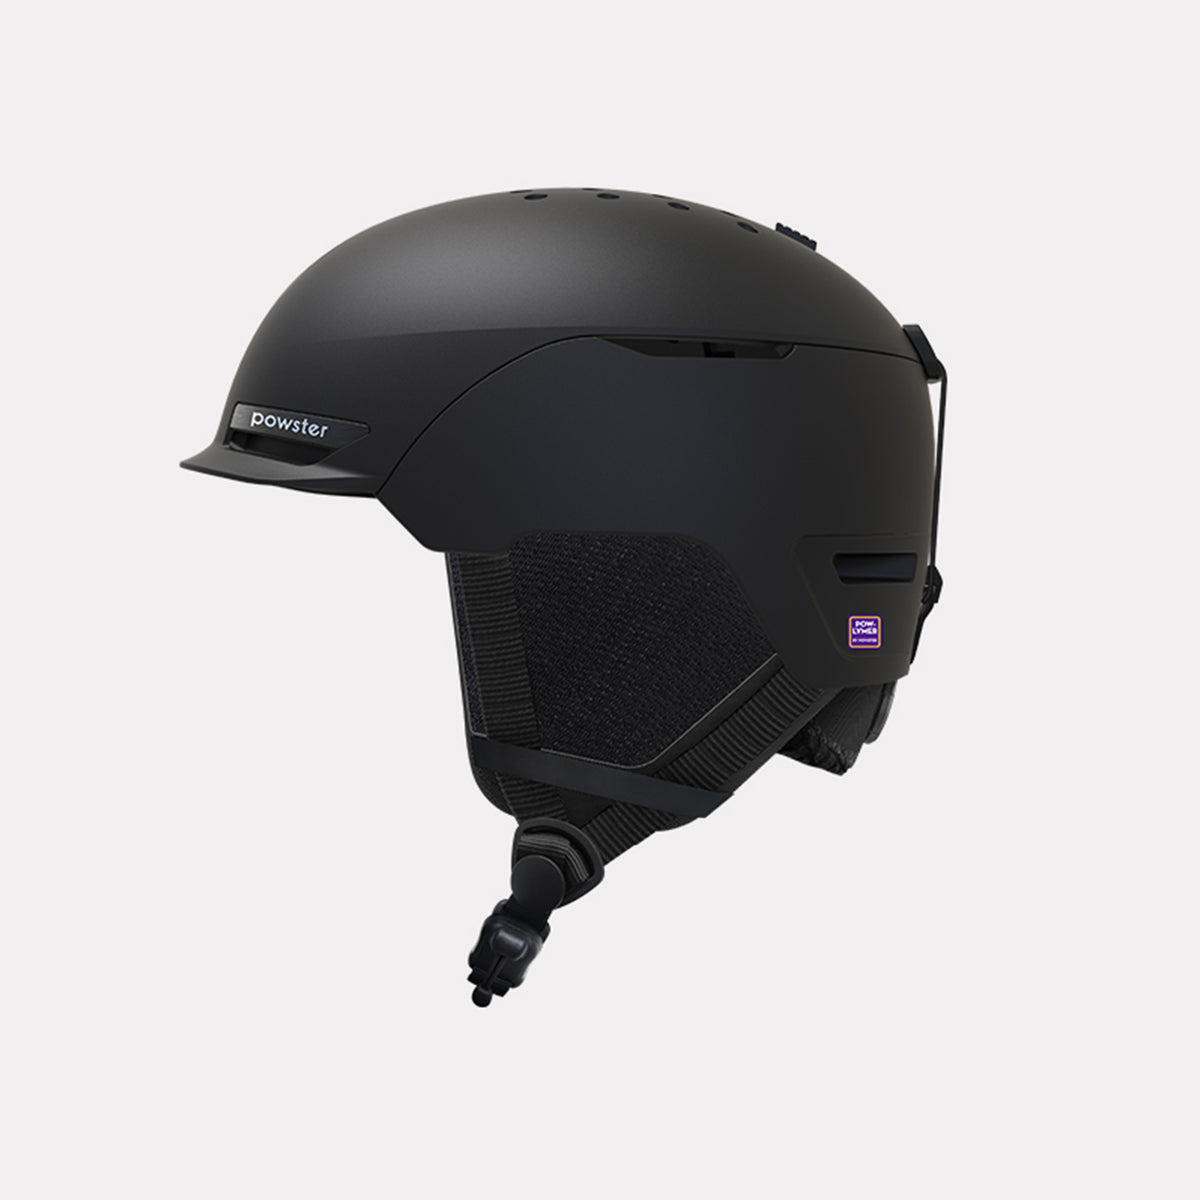 Cavalier ABS Ski Helmet With Visor